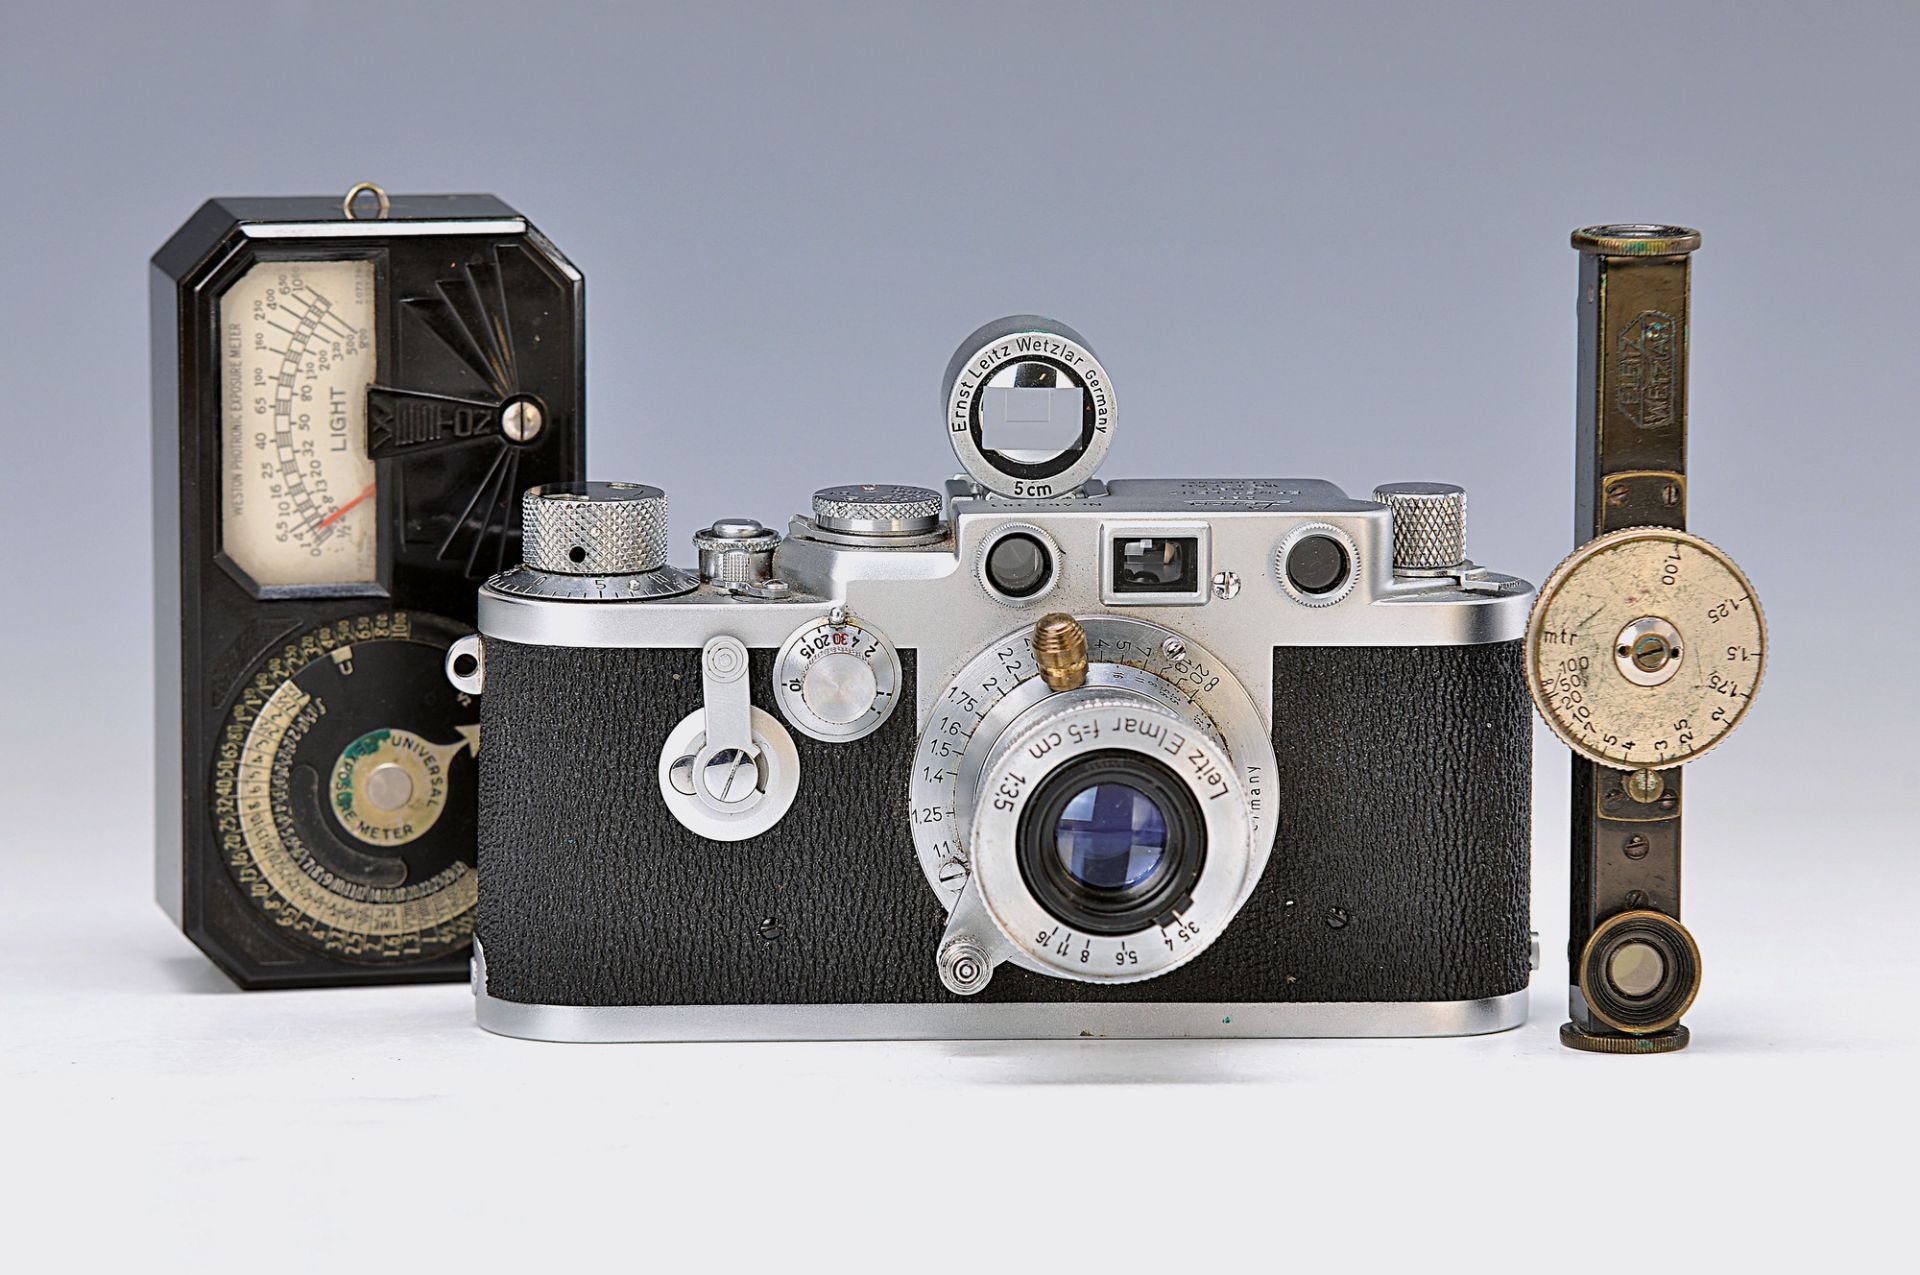 Leica IIIc, Nr.463381, Bj.1948/49 with Elmar 5cm 1:3.5; Leitz range finder, tripod, view finder